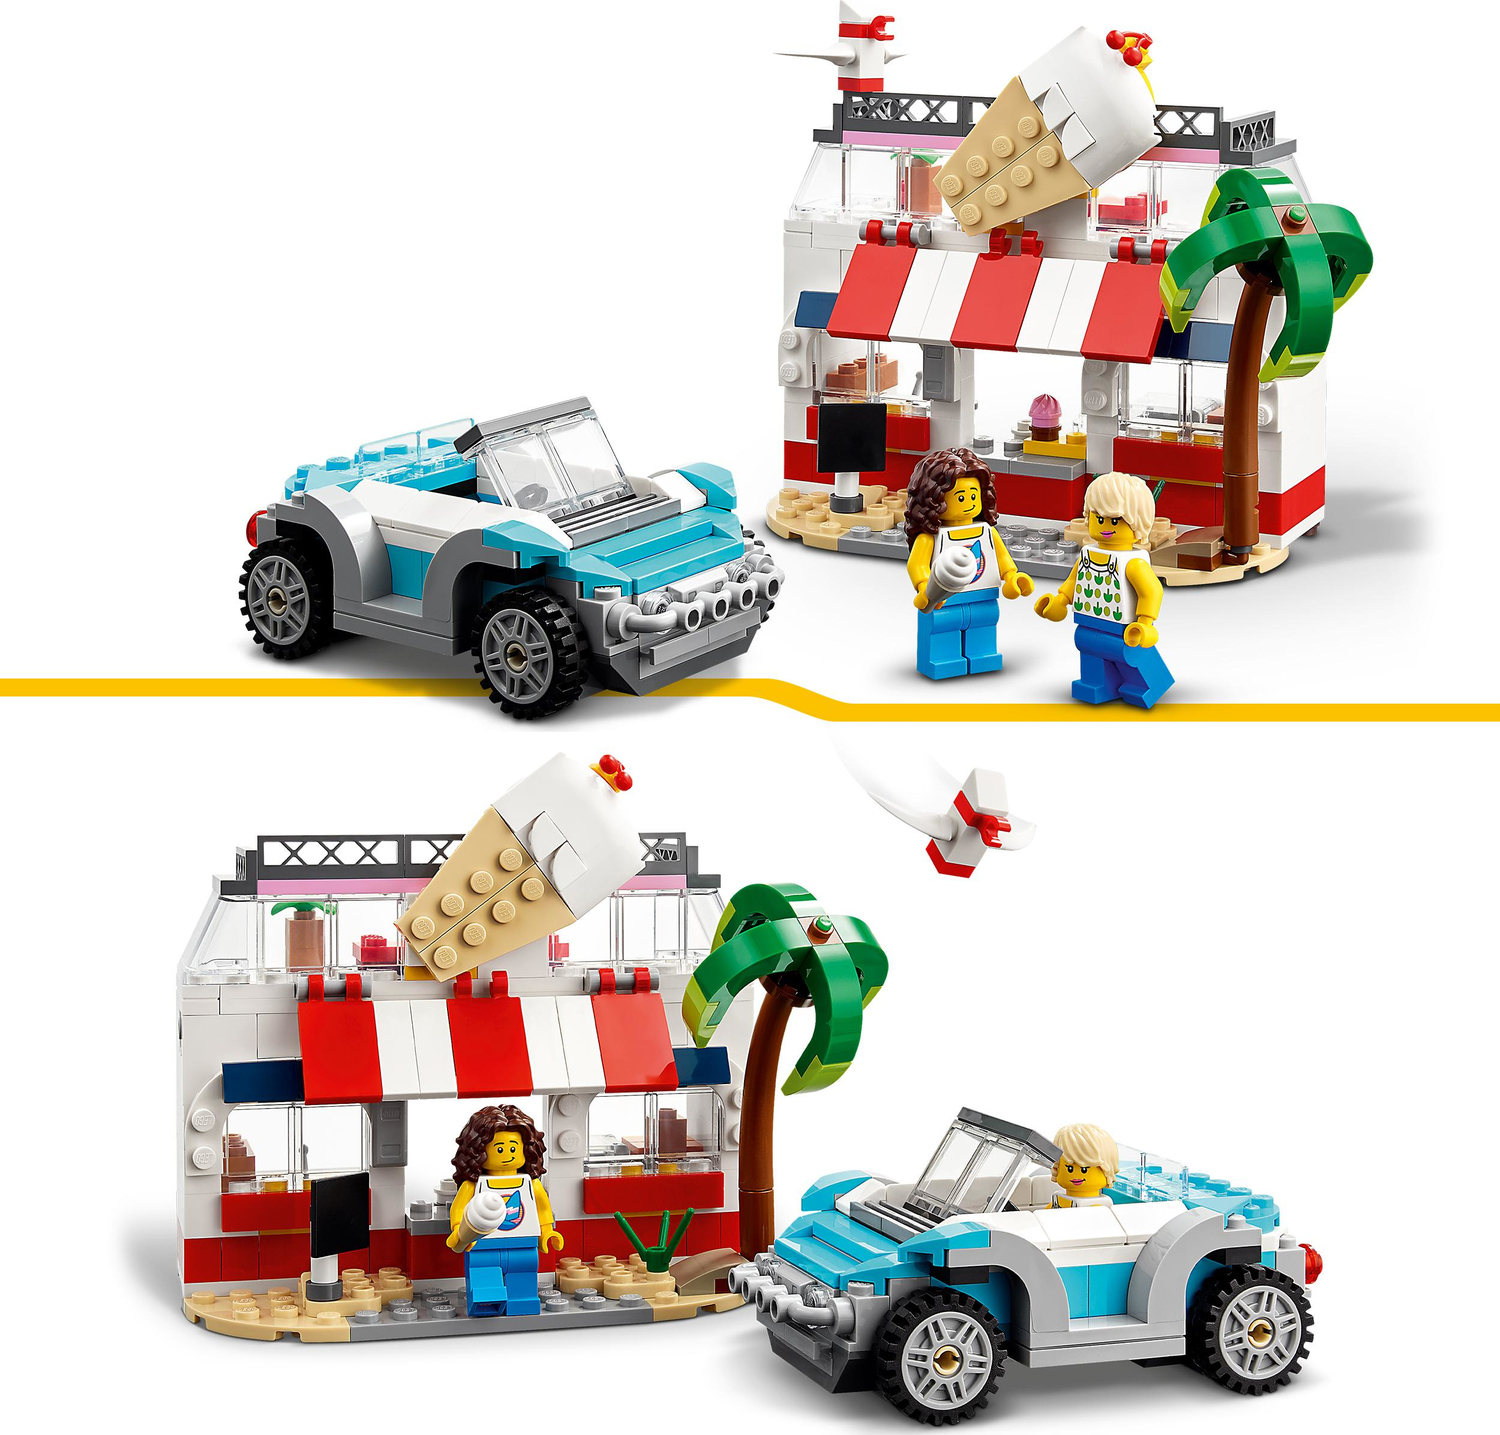 LEGO® Creator 3-in-1: Beach Camper Van